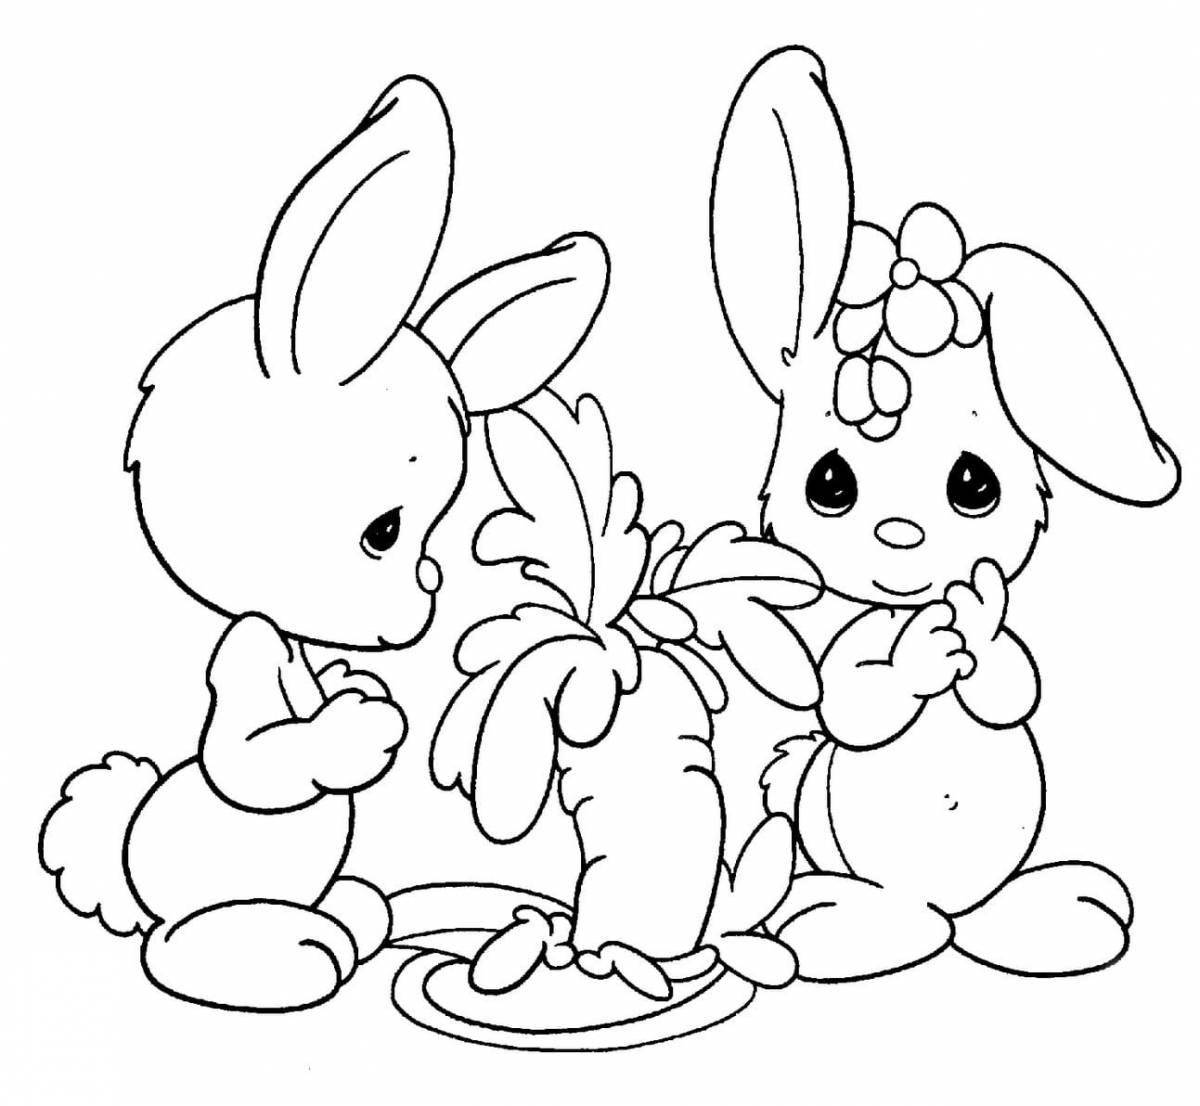 Fun coloring book for rabbits